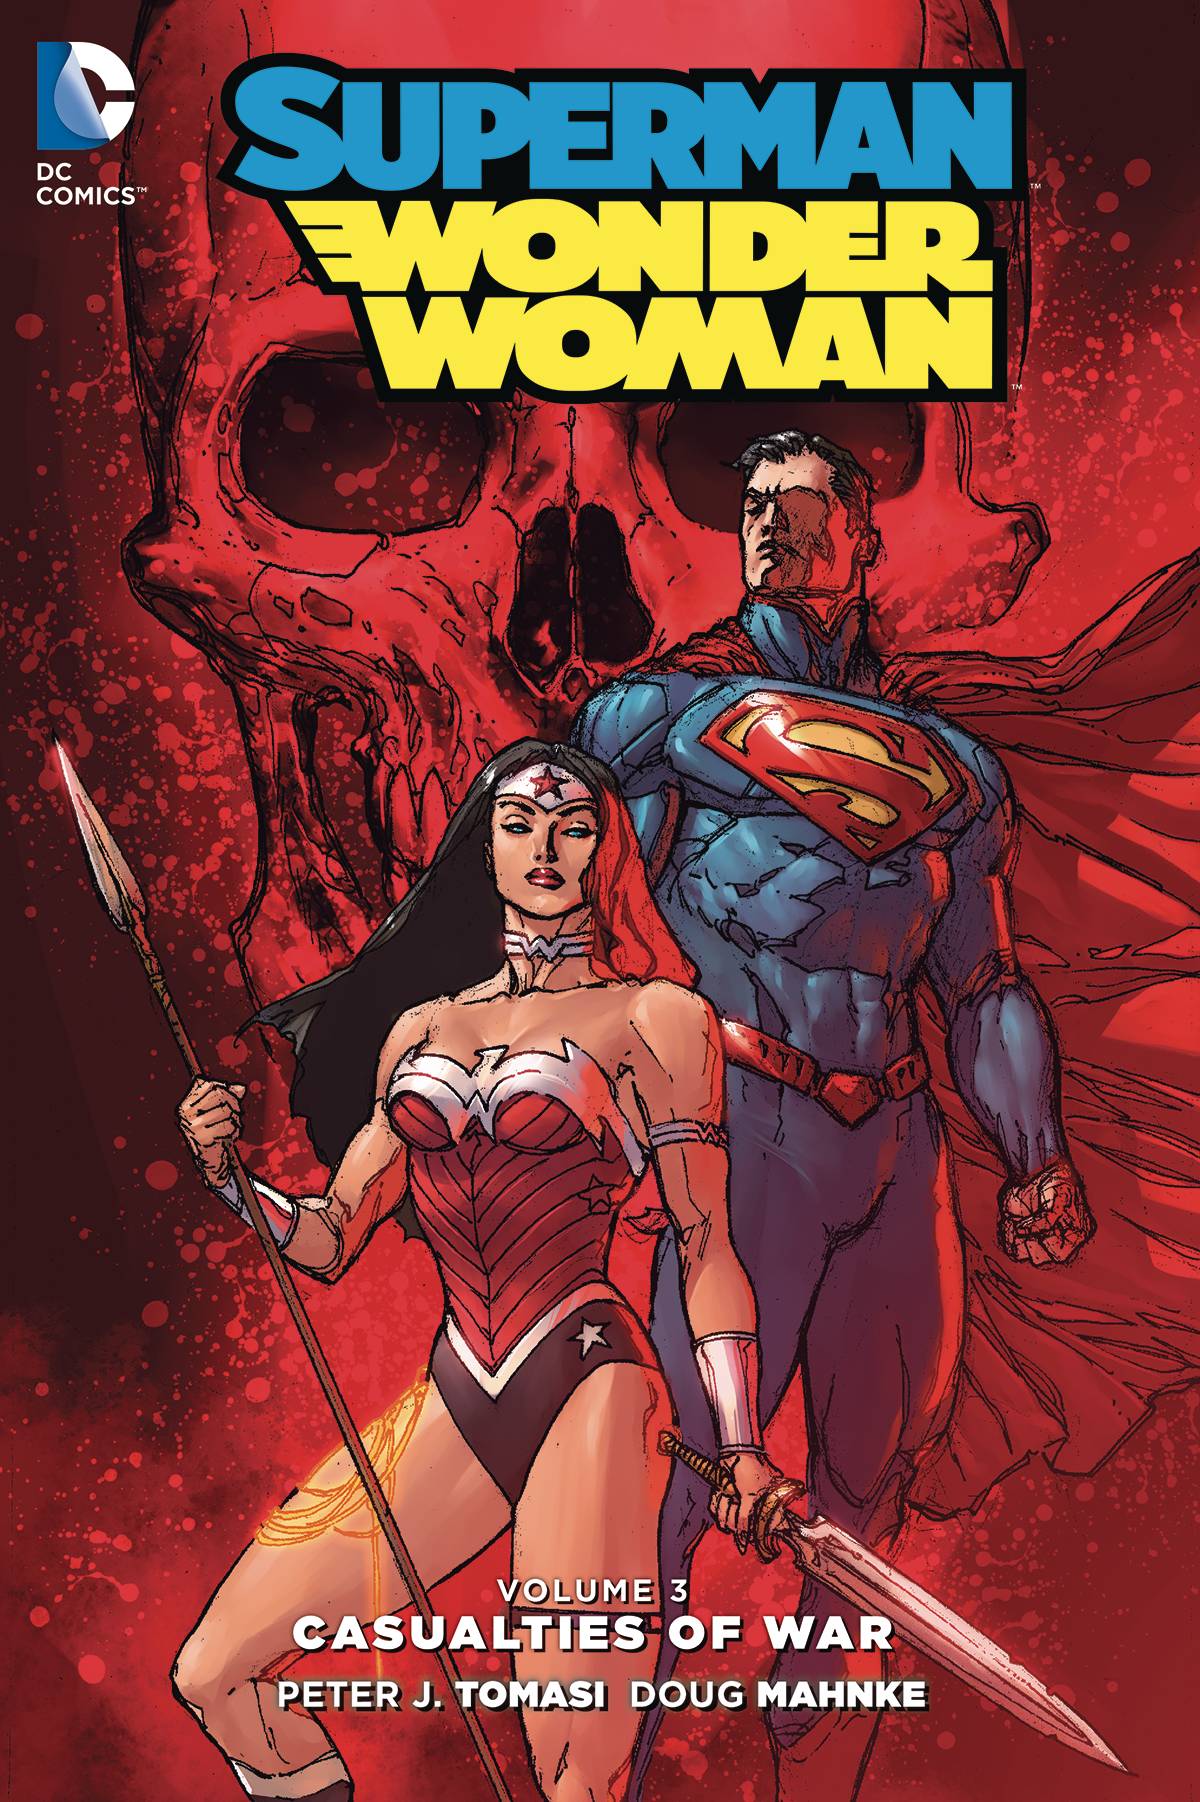 Superman Wonder Woman Graphic Novel Volume 3 Casualties of War